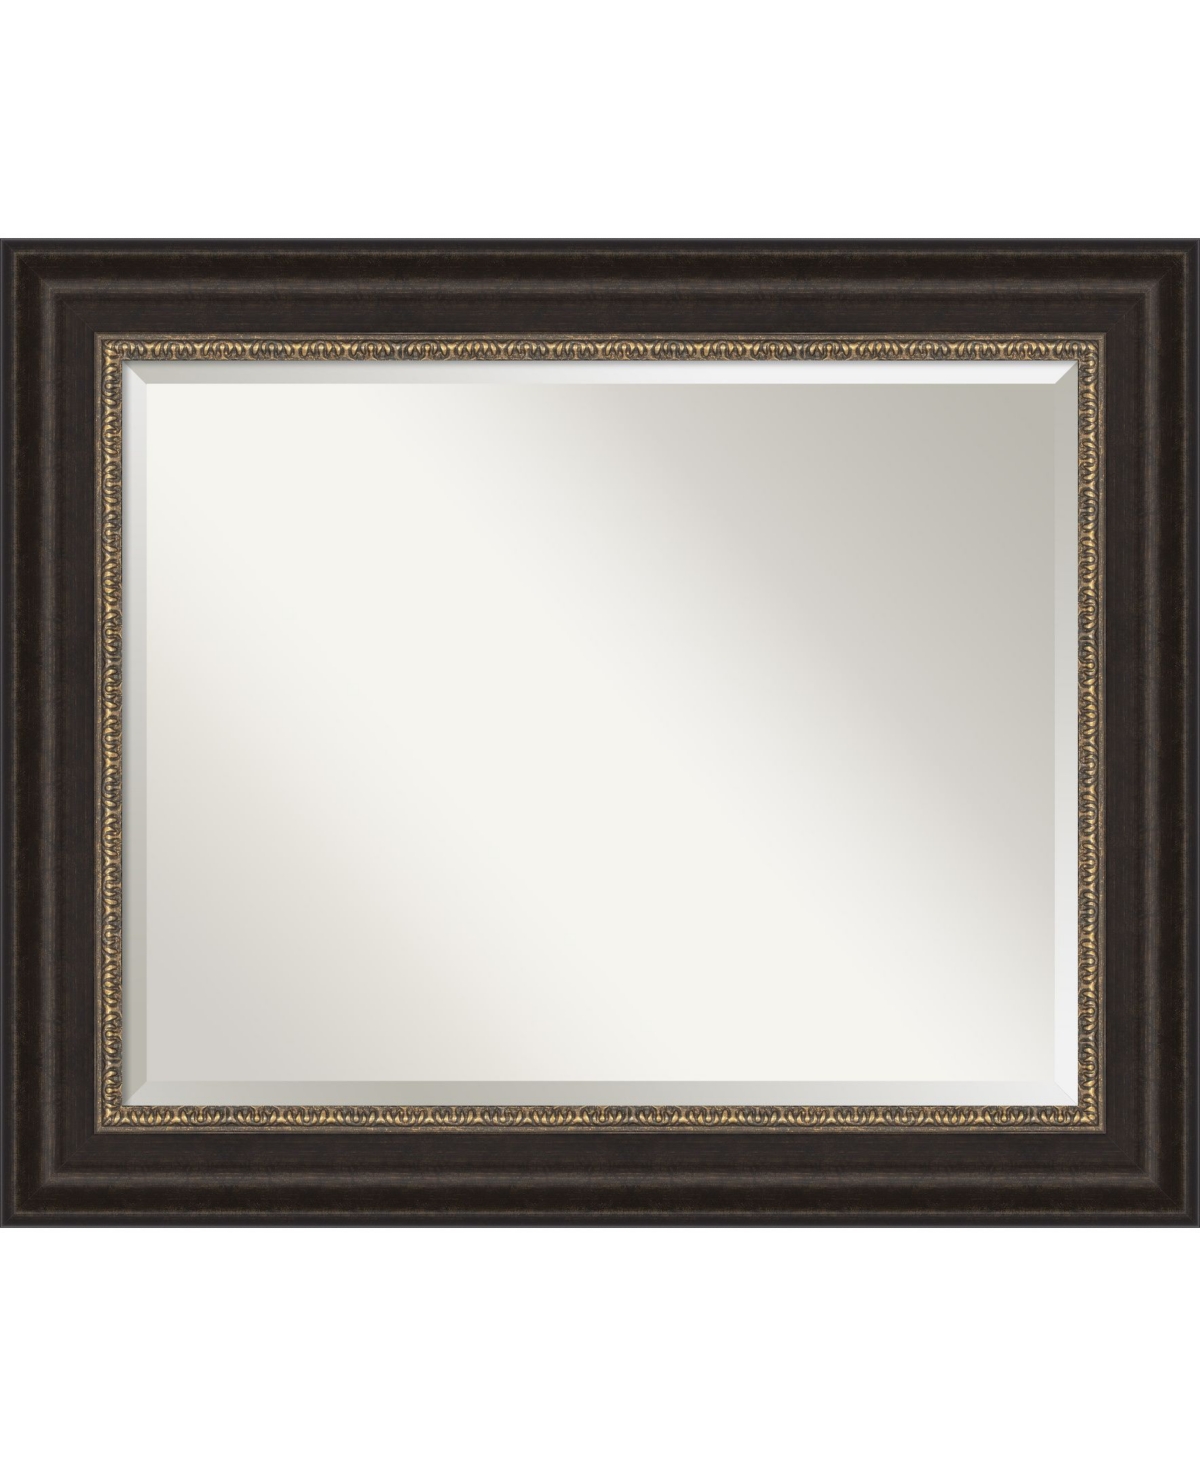 Impact Framed Bathroom Vanity Wall Mirror, 34.25" x 28.25" - Bronze